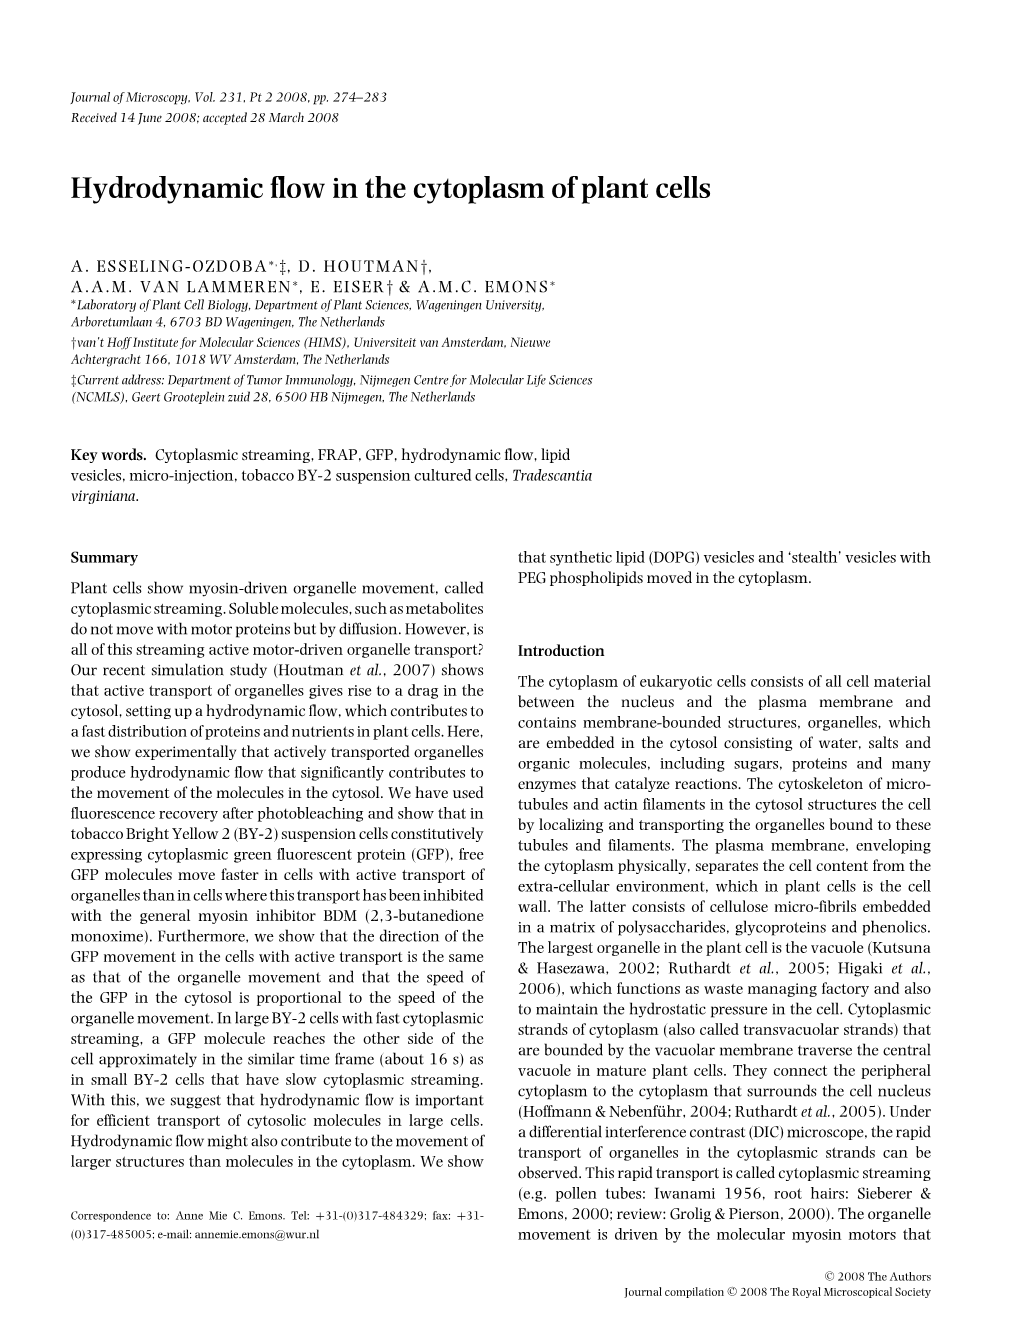 Hydrodynamic Flow in the Cytoplasm of Plant Cells